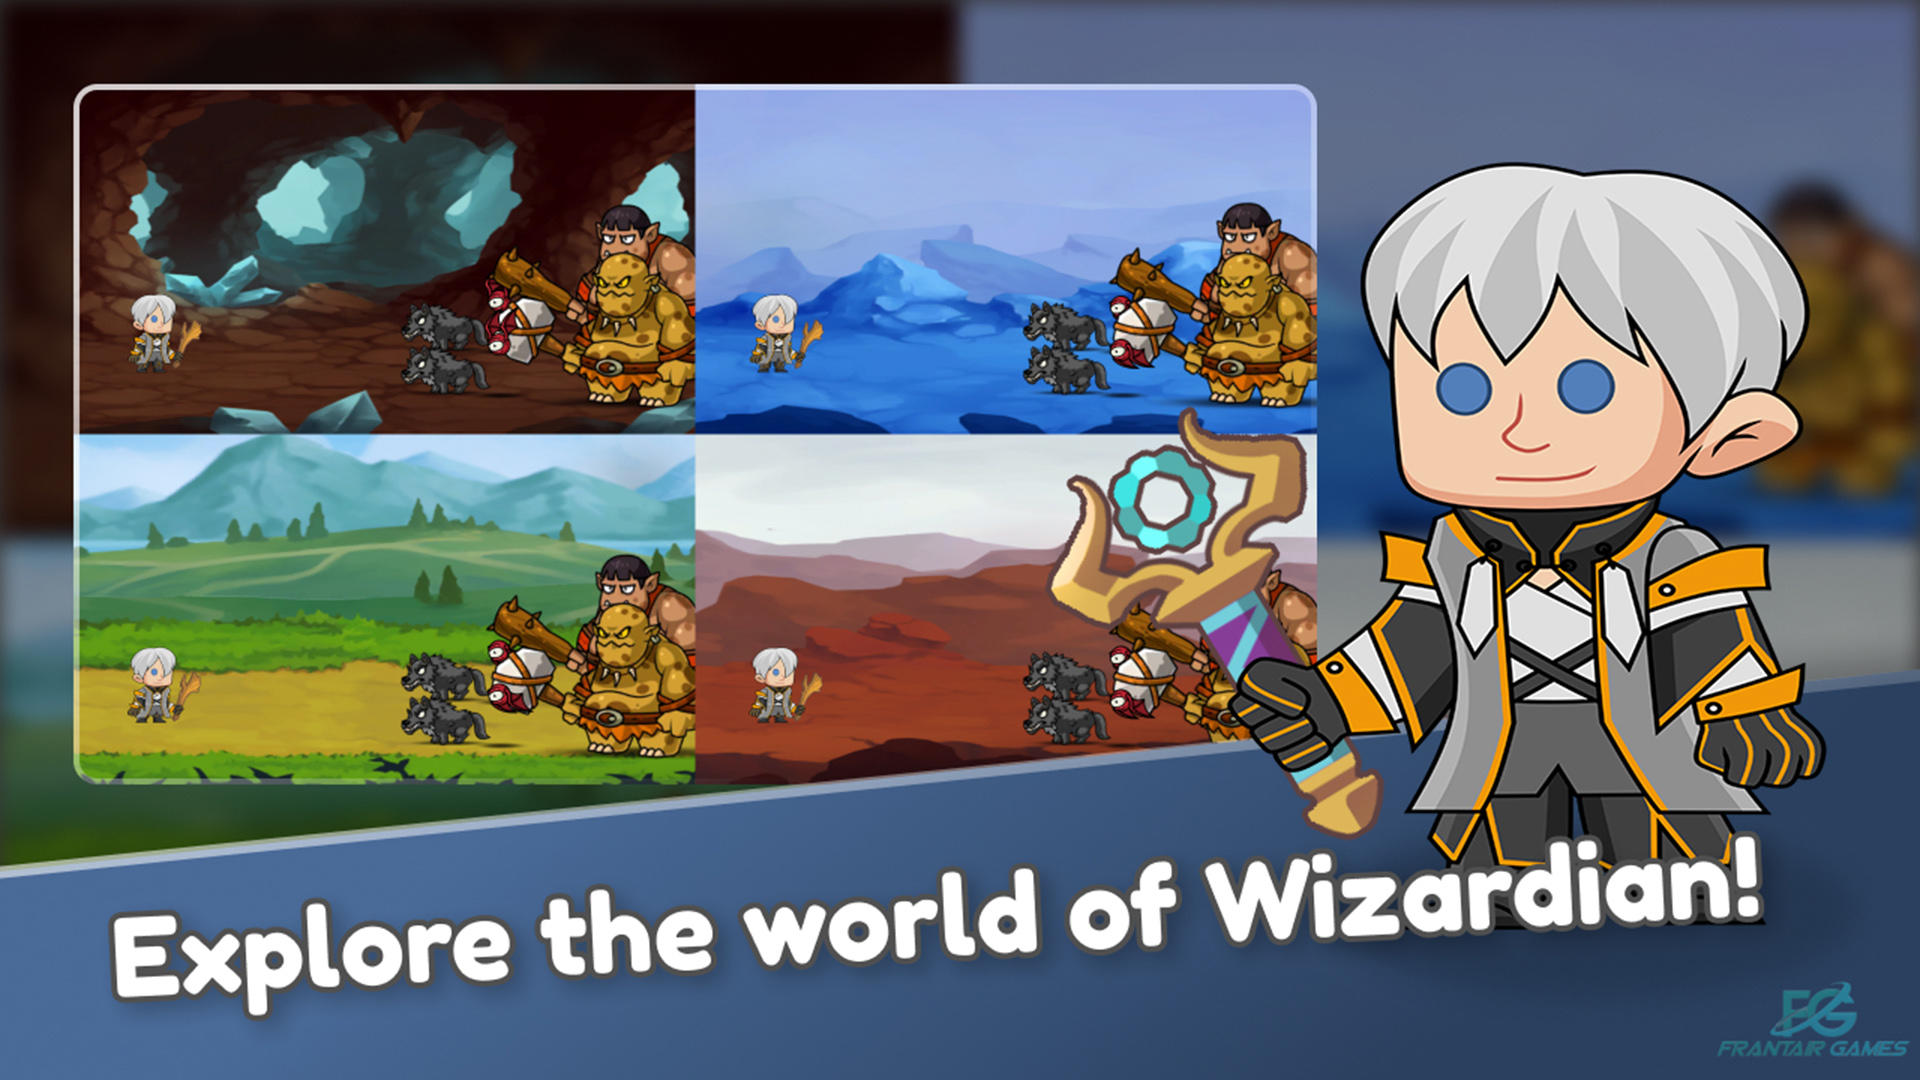 Wizard of Legend mobile Version Android iOS vorregistrieren-TapTap